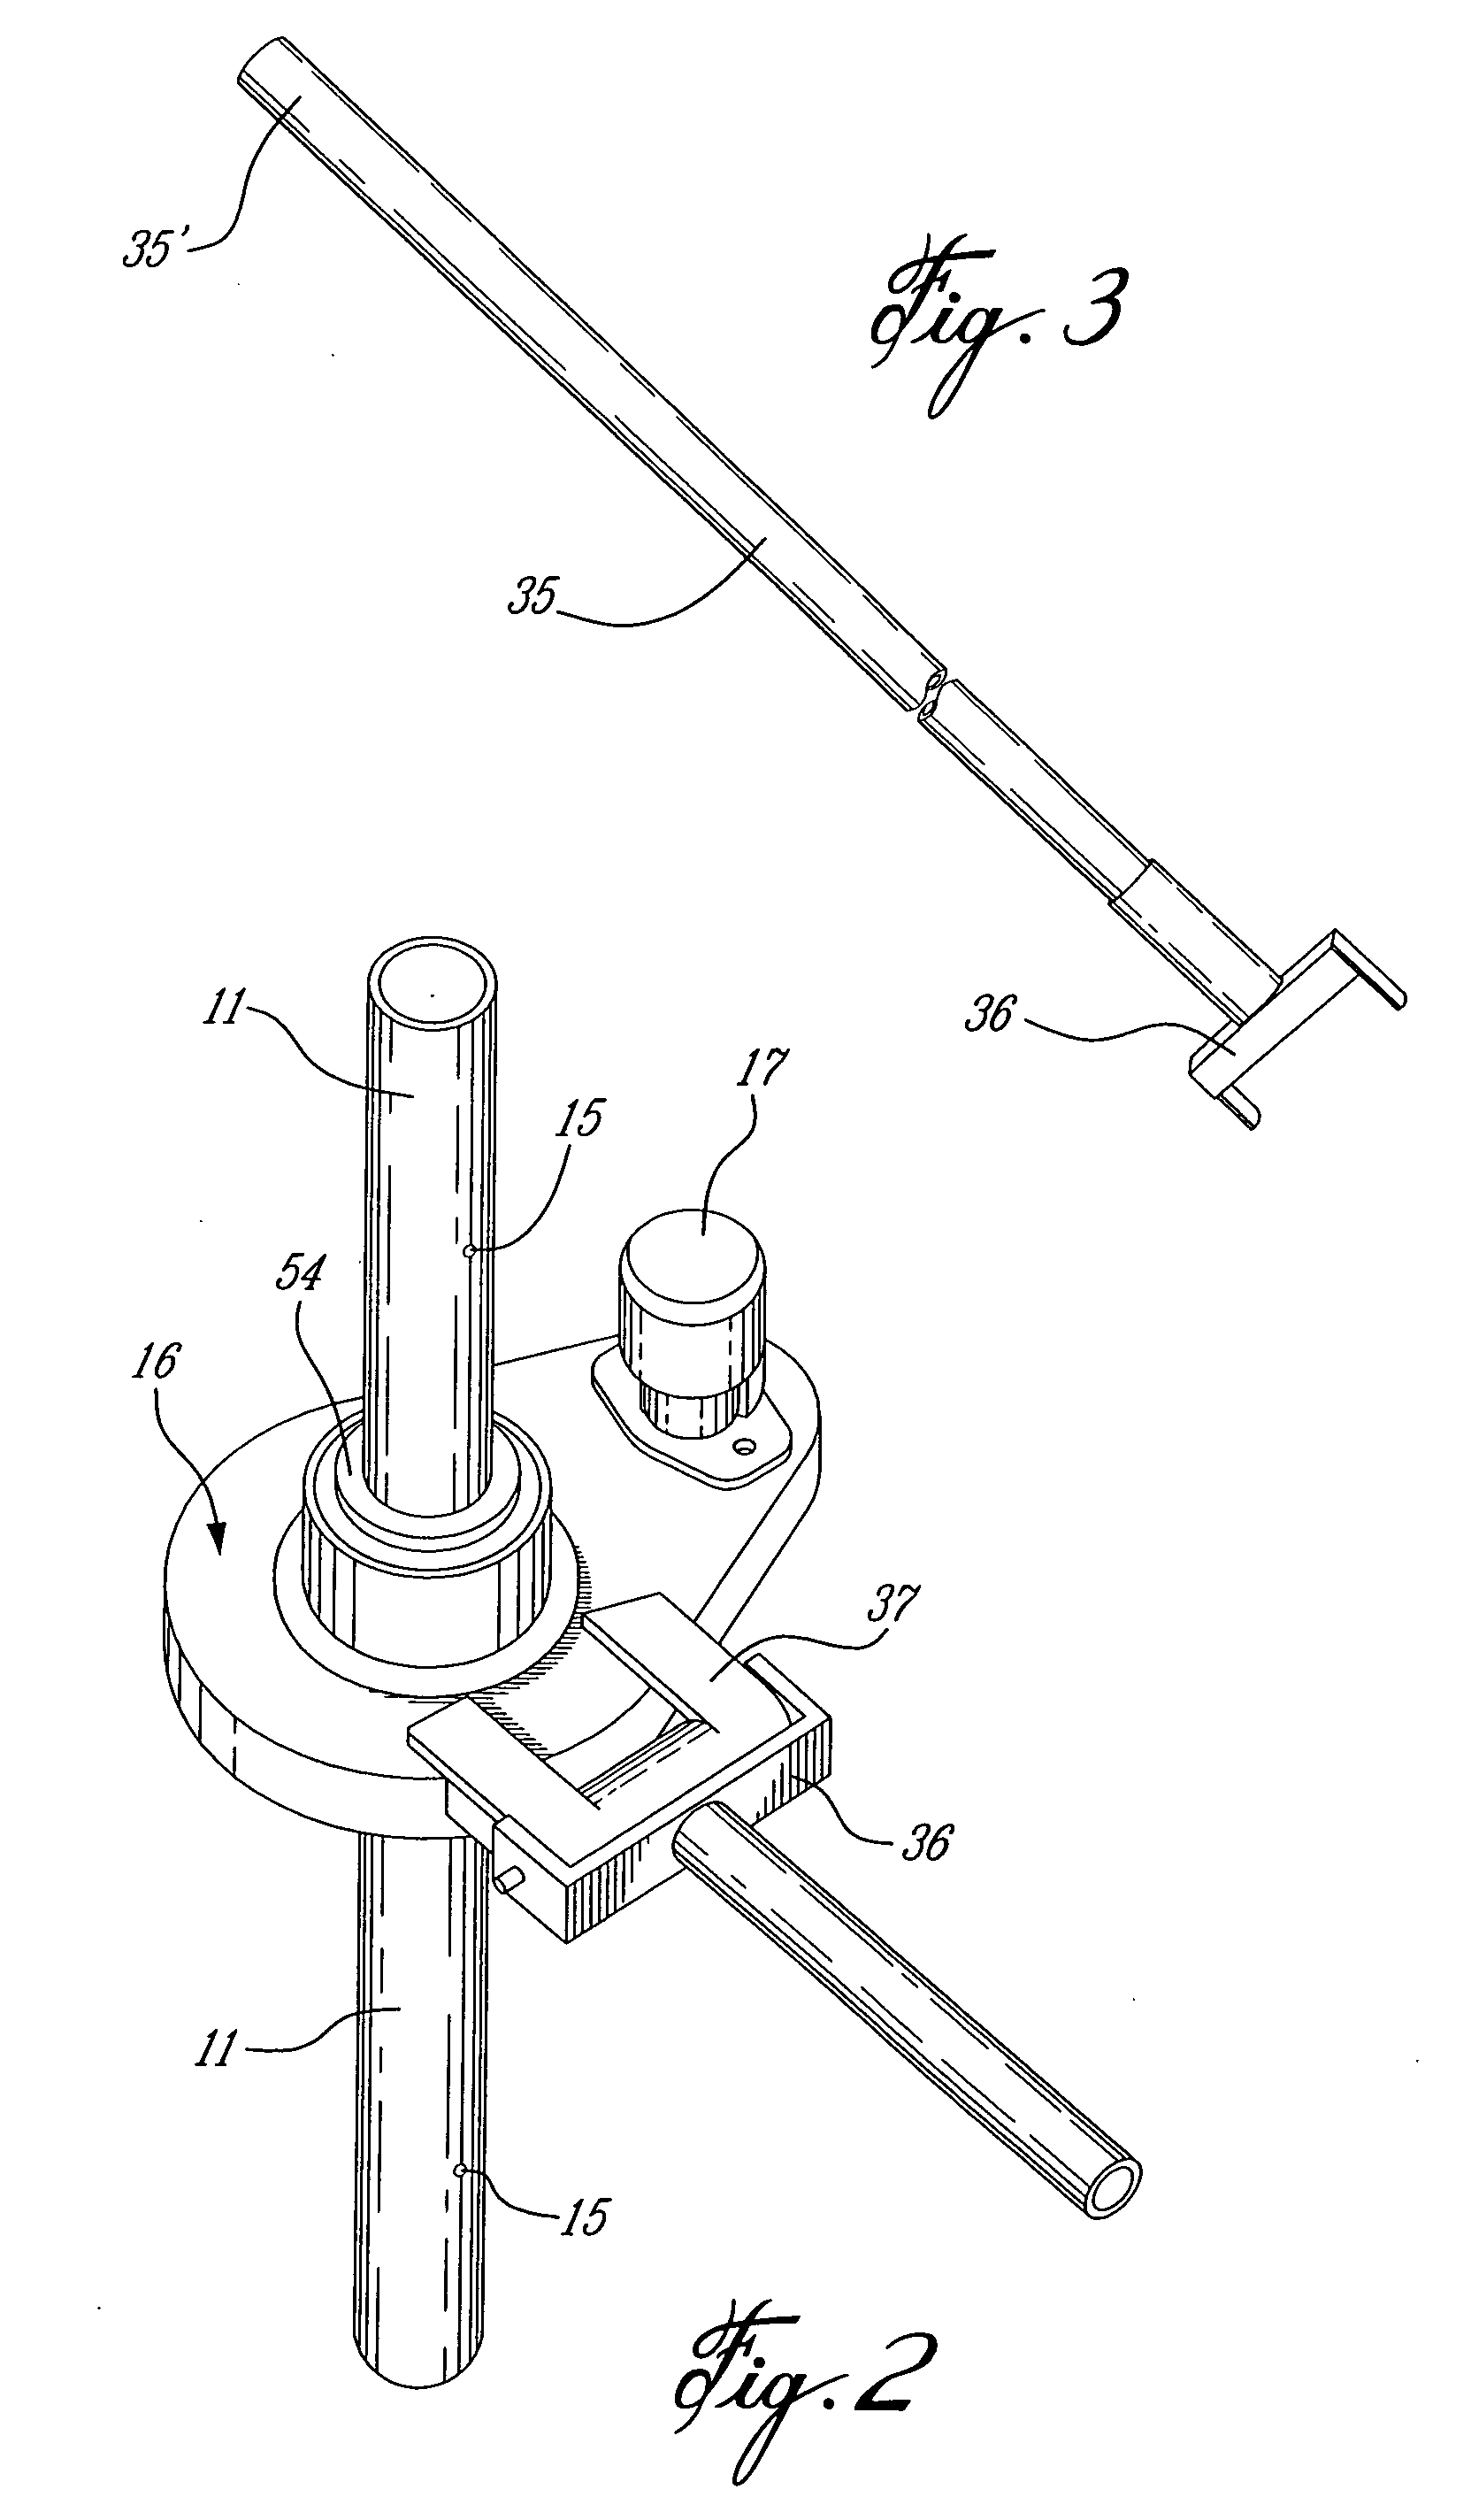 Rotational drive apparatus for screw pilings